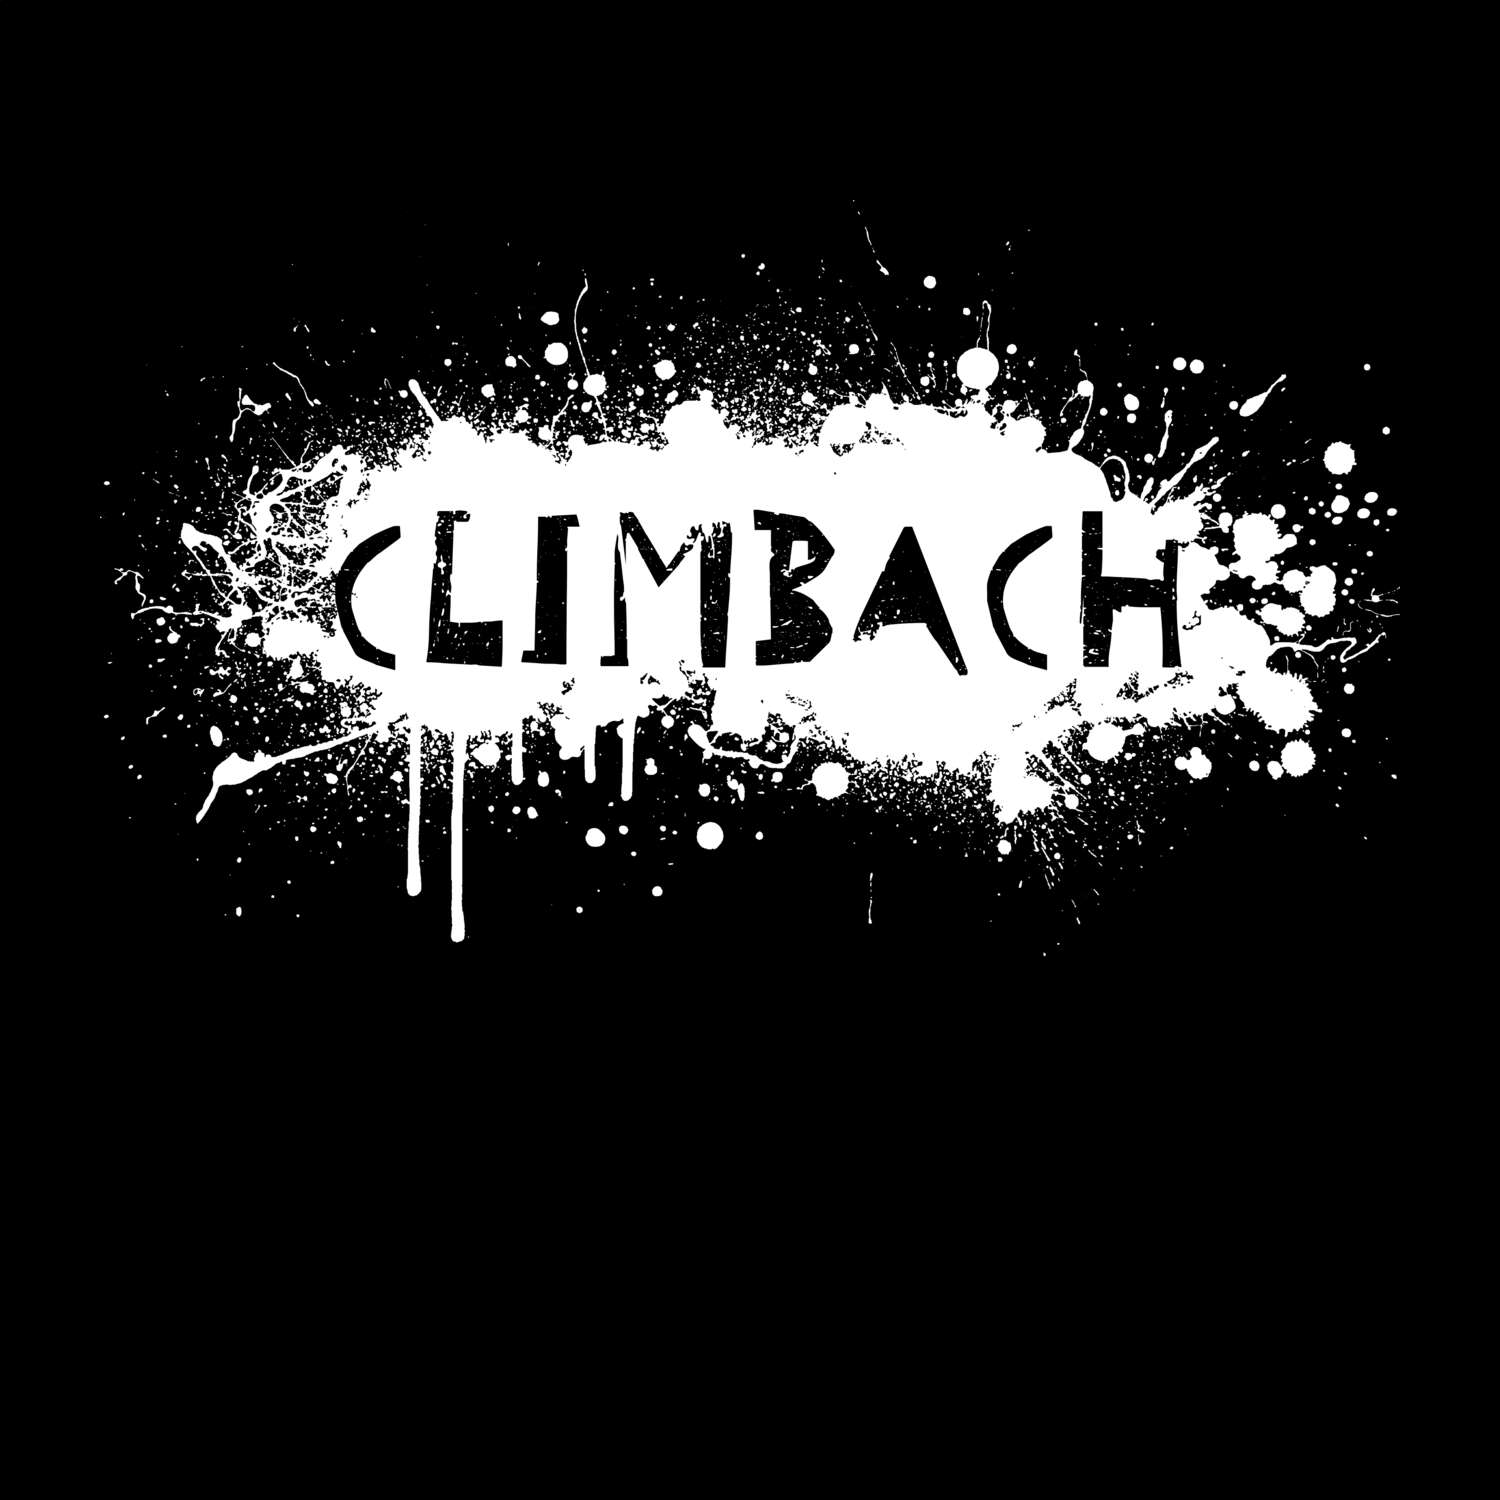 Climbach T-Shirt »Paint Splash Punk«